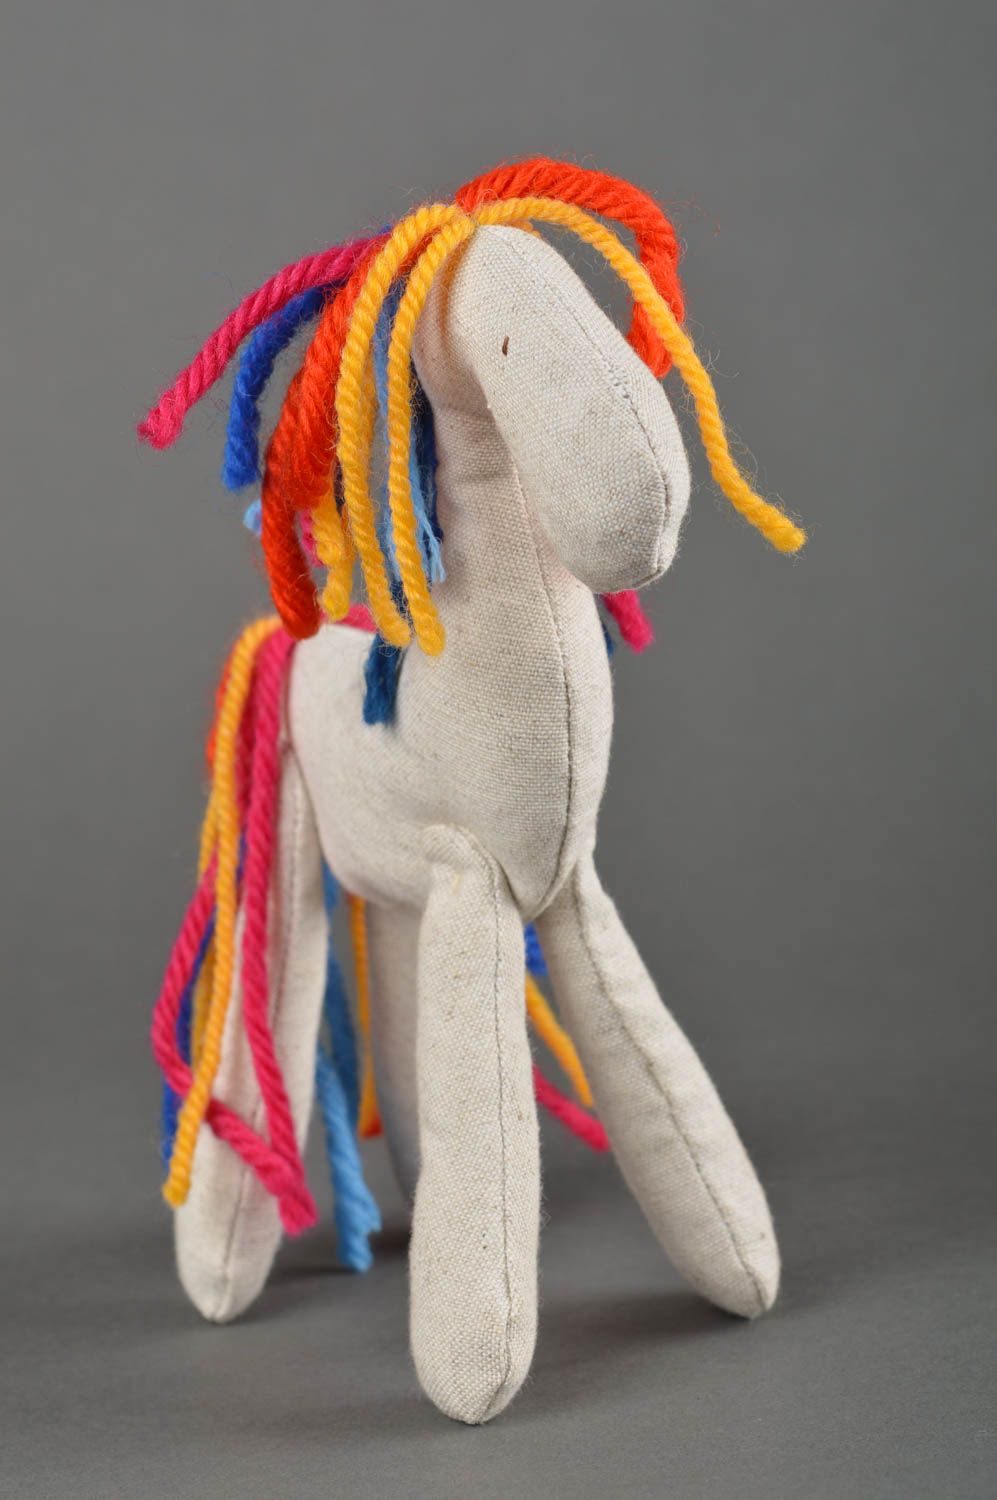 Handmade stuffed toy horse toy soft cute toy for children nursery decor ideas photo 2